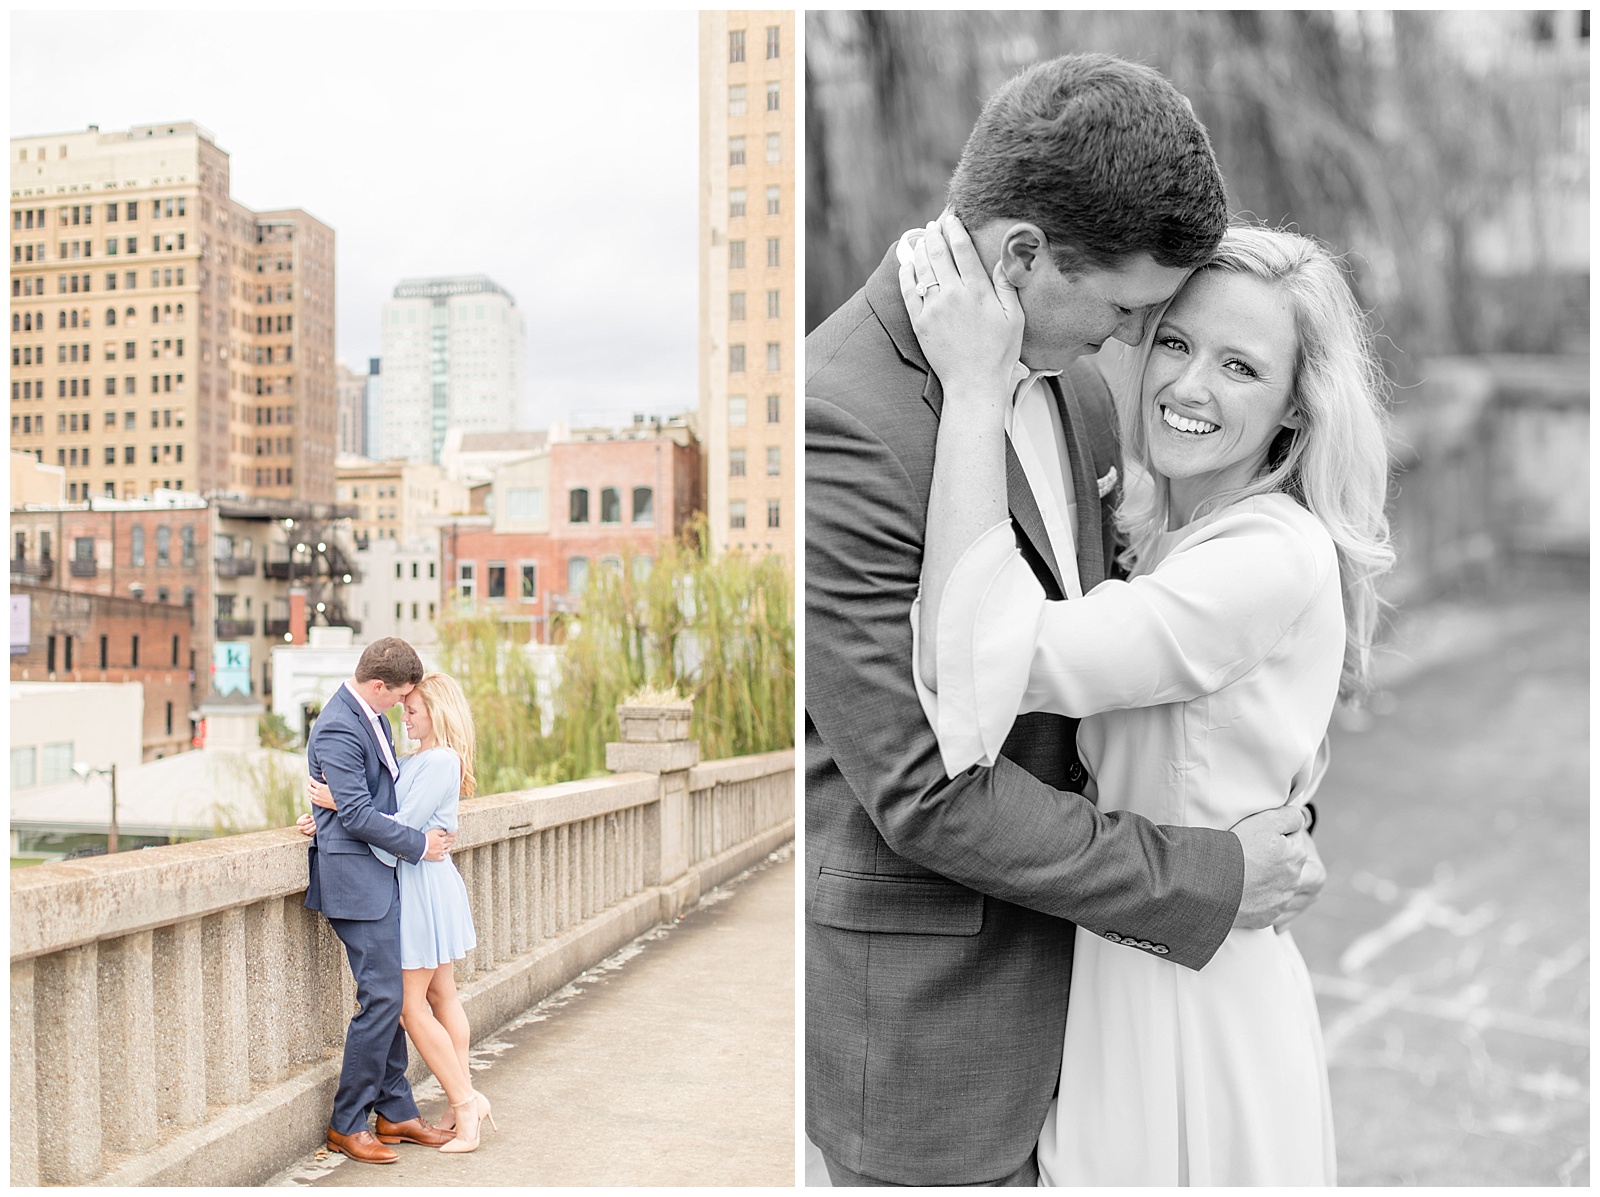 Logan & Steven's Birmingham Engagement | Katie & Alec Photography Best Wedding Photographers Birmingham Alabama 35